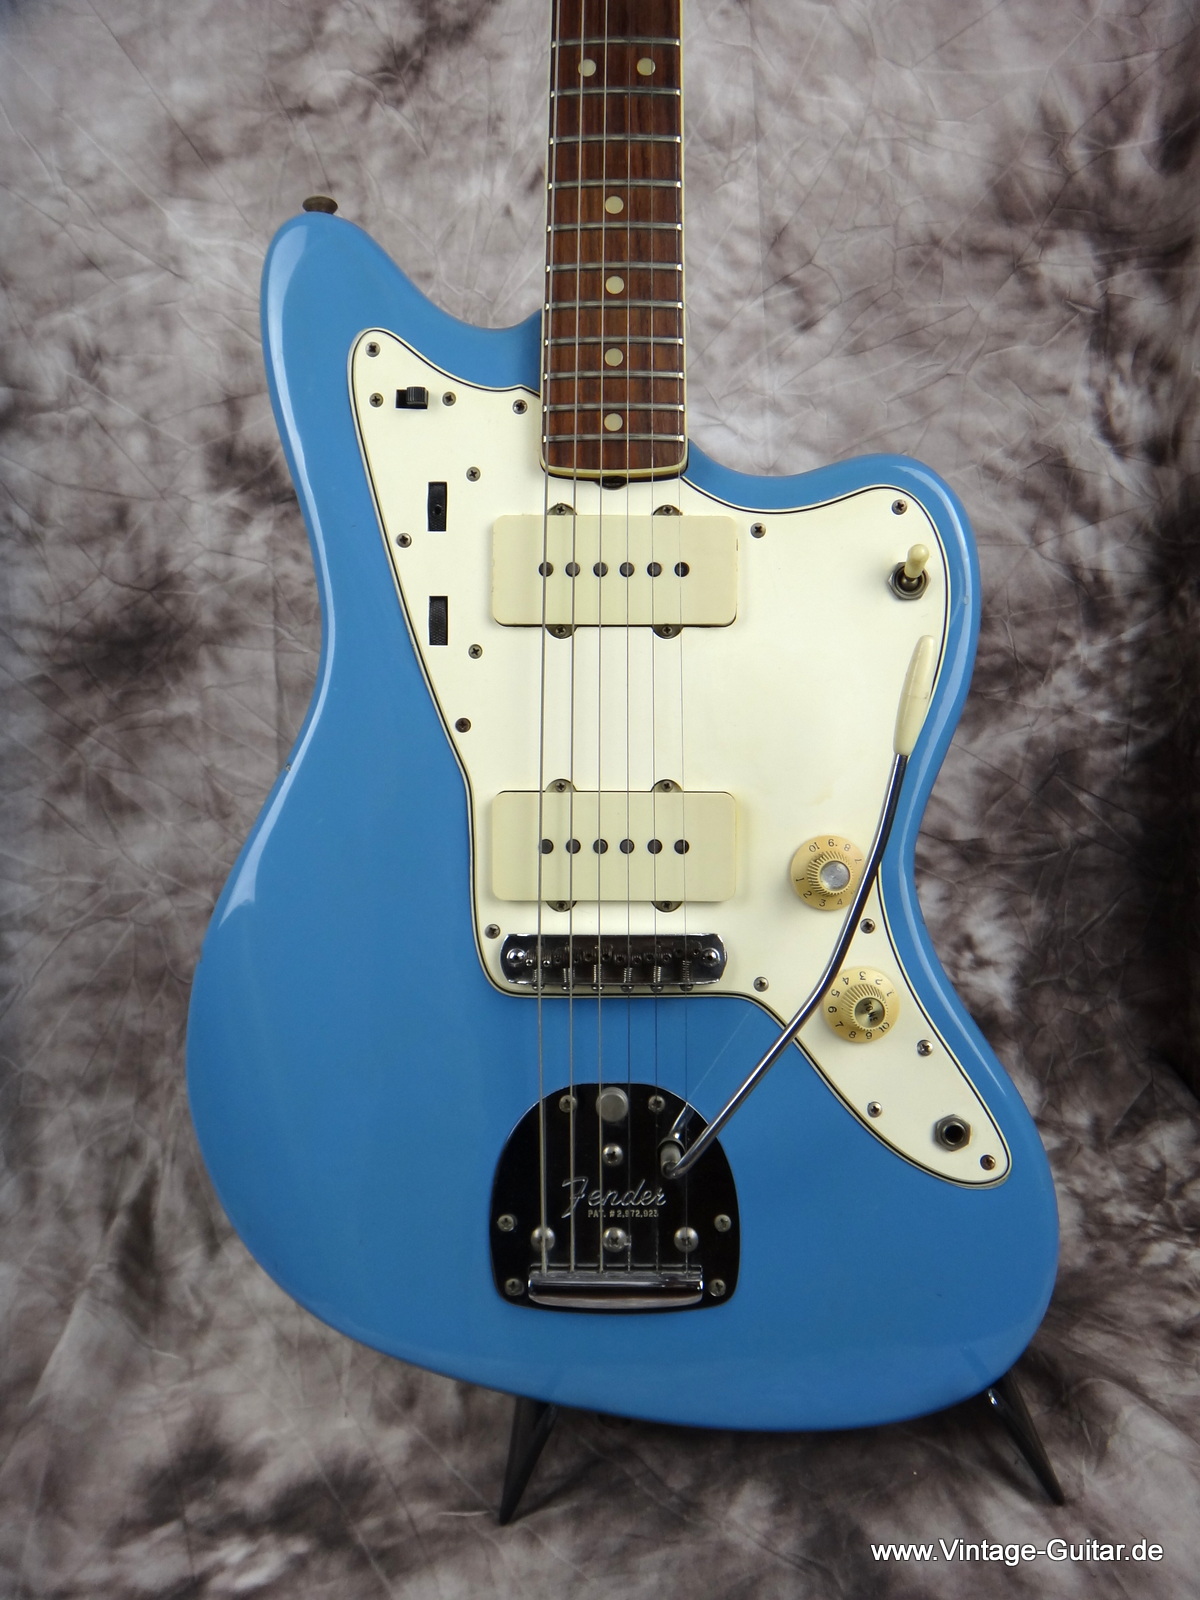 Fender_Jazzmaster-1966_blue-refinished-002.JPG